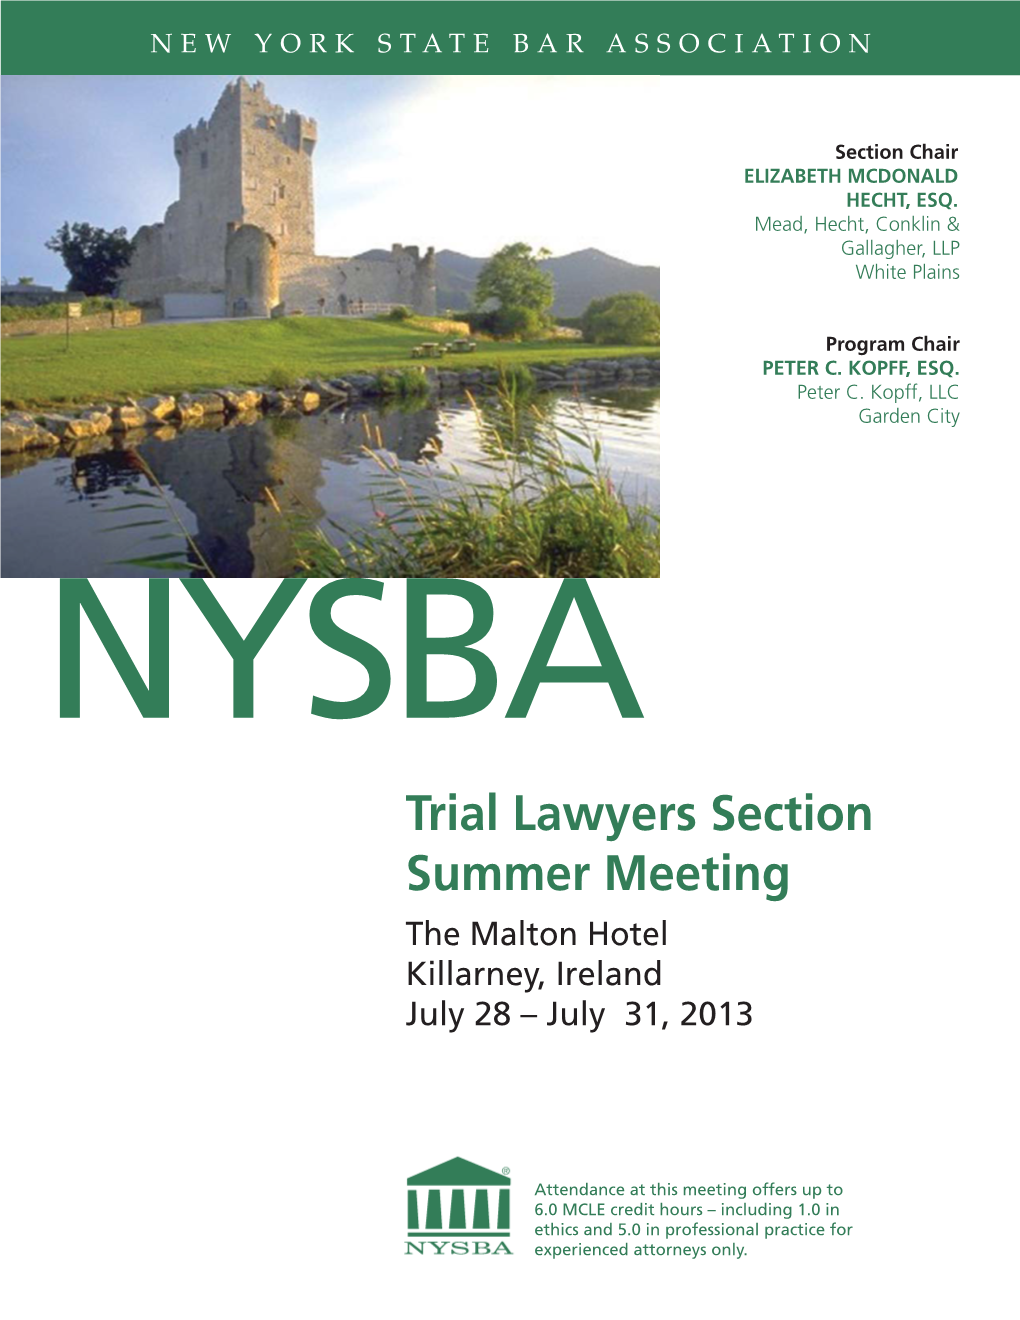 Trial Lawyers Section Summer Meeting the Malton Hotel Killarney, Ireland July 28 – July 31, 2013